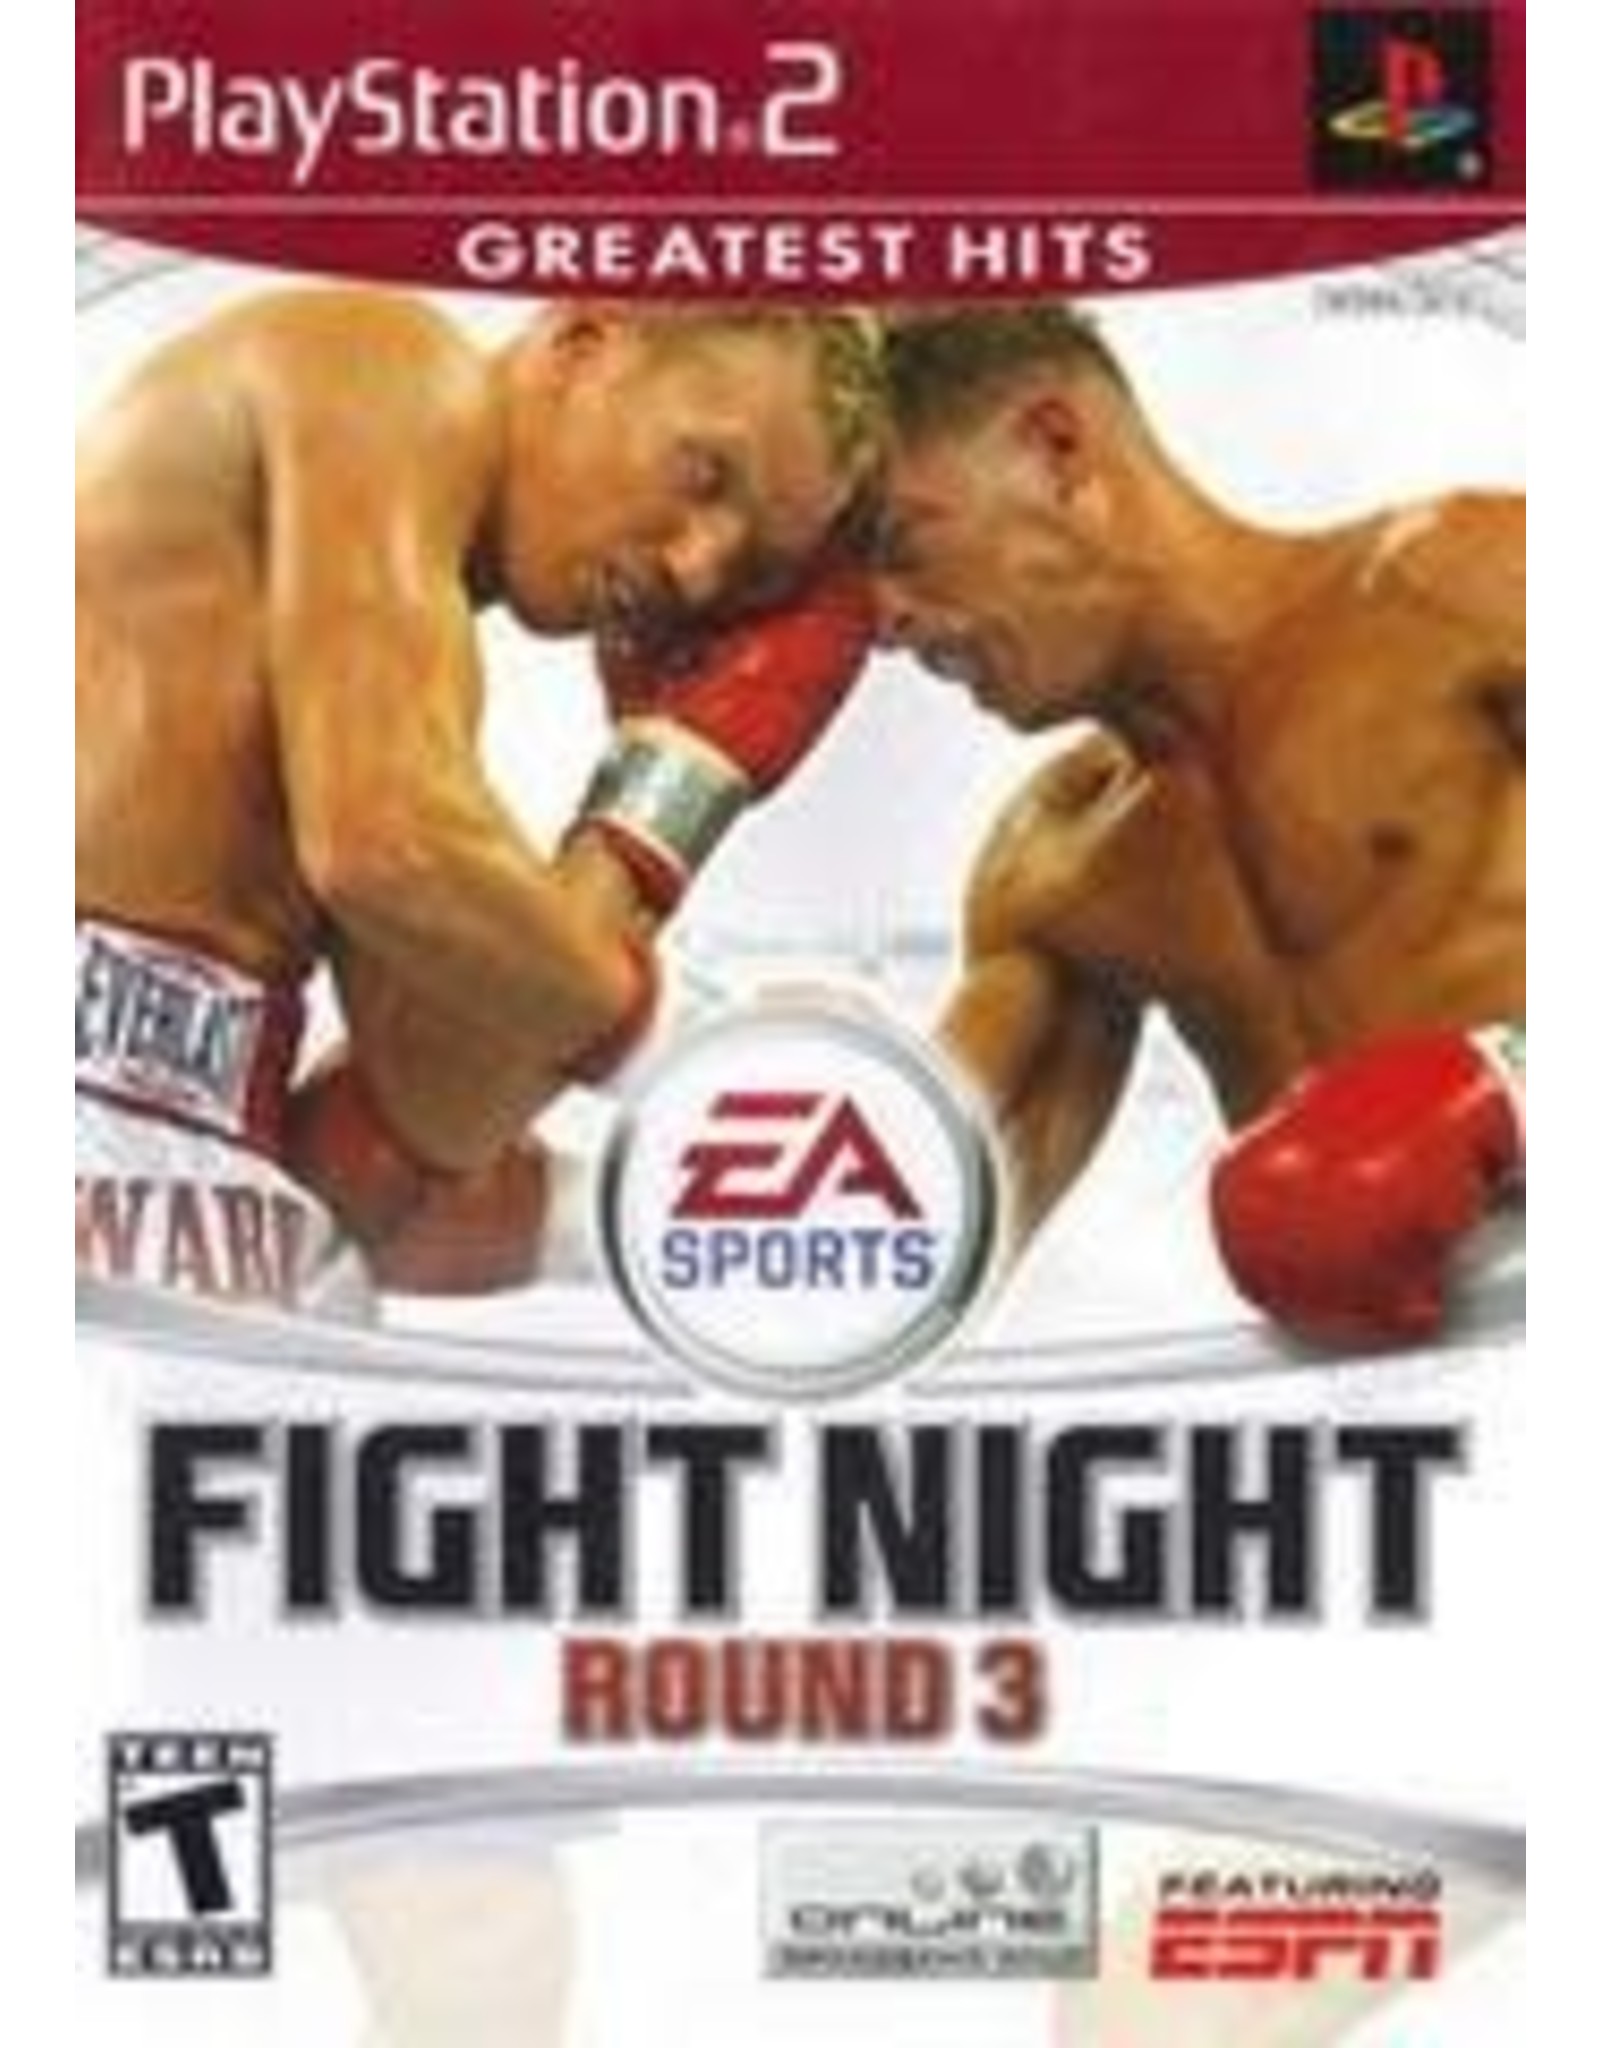 Playstation 2 Fight Night Round 3 (Greatest Hits, CiB)